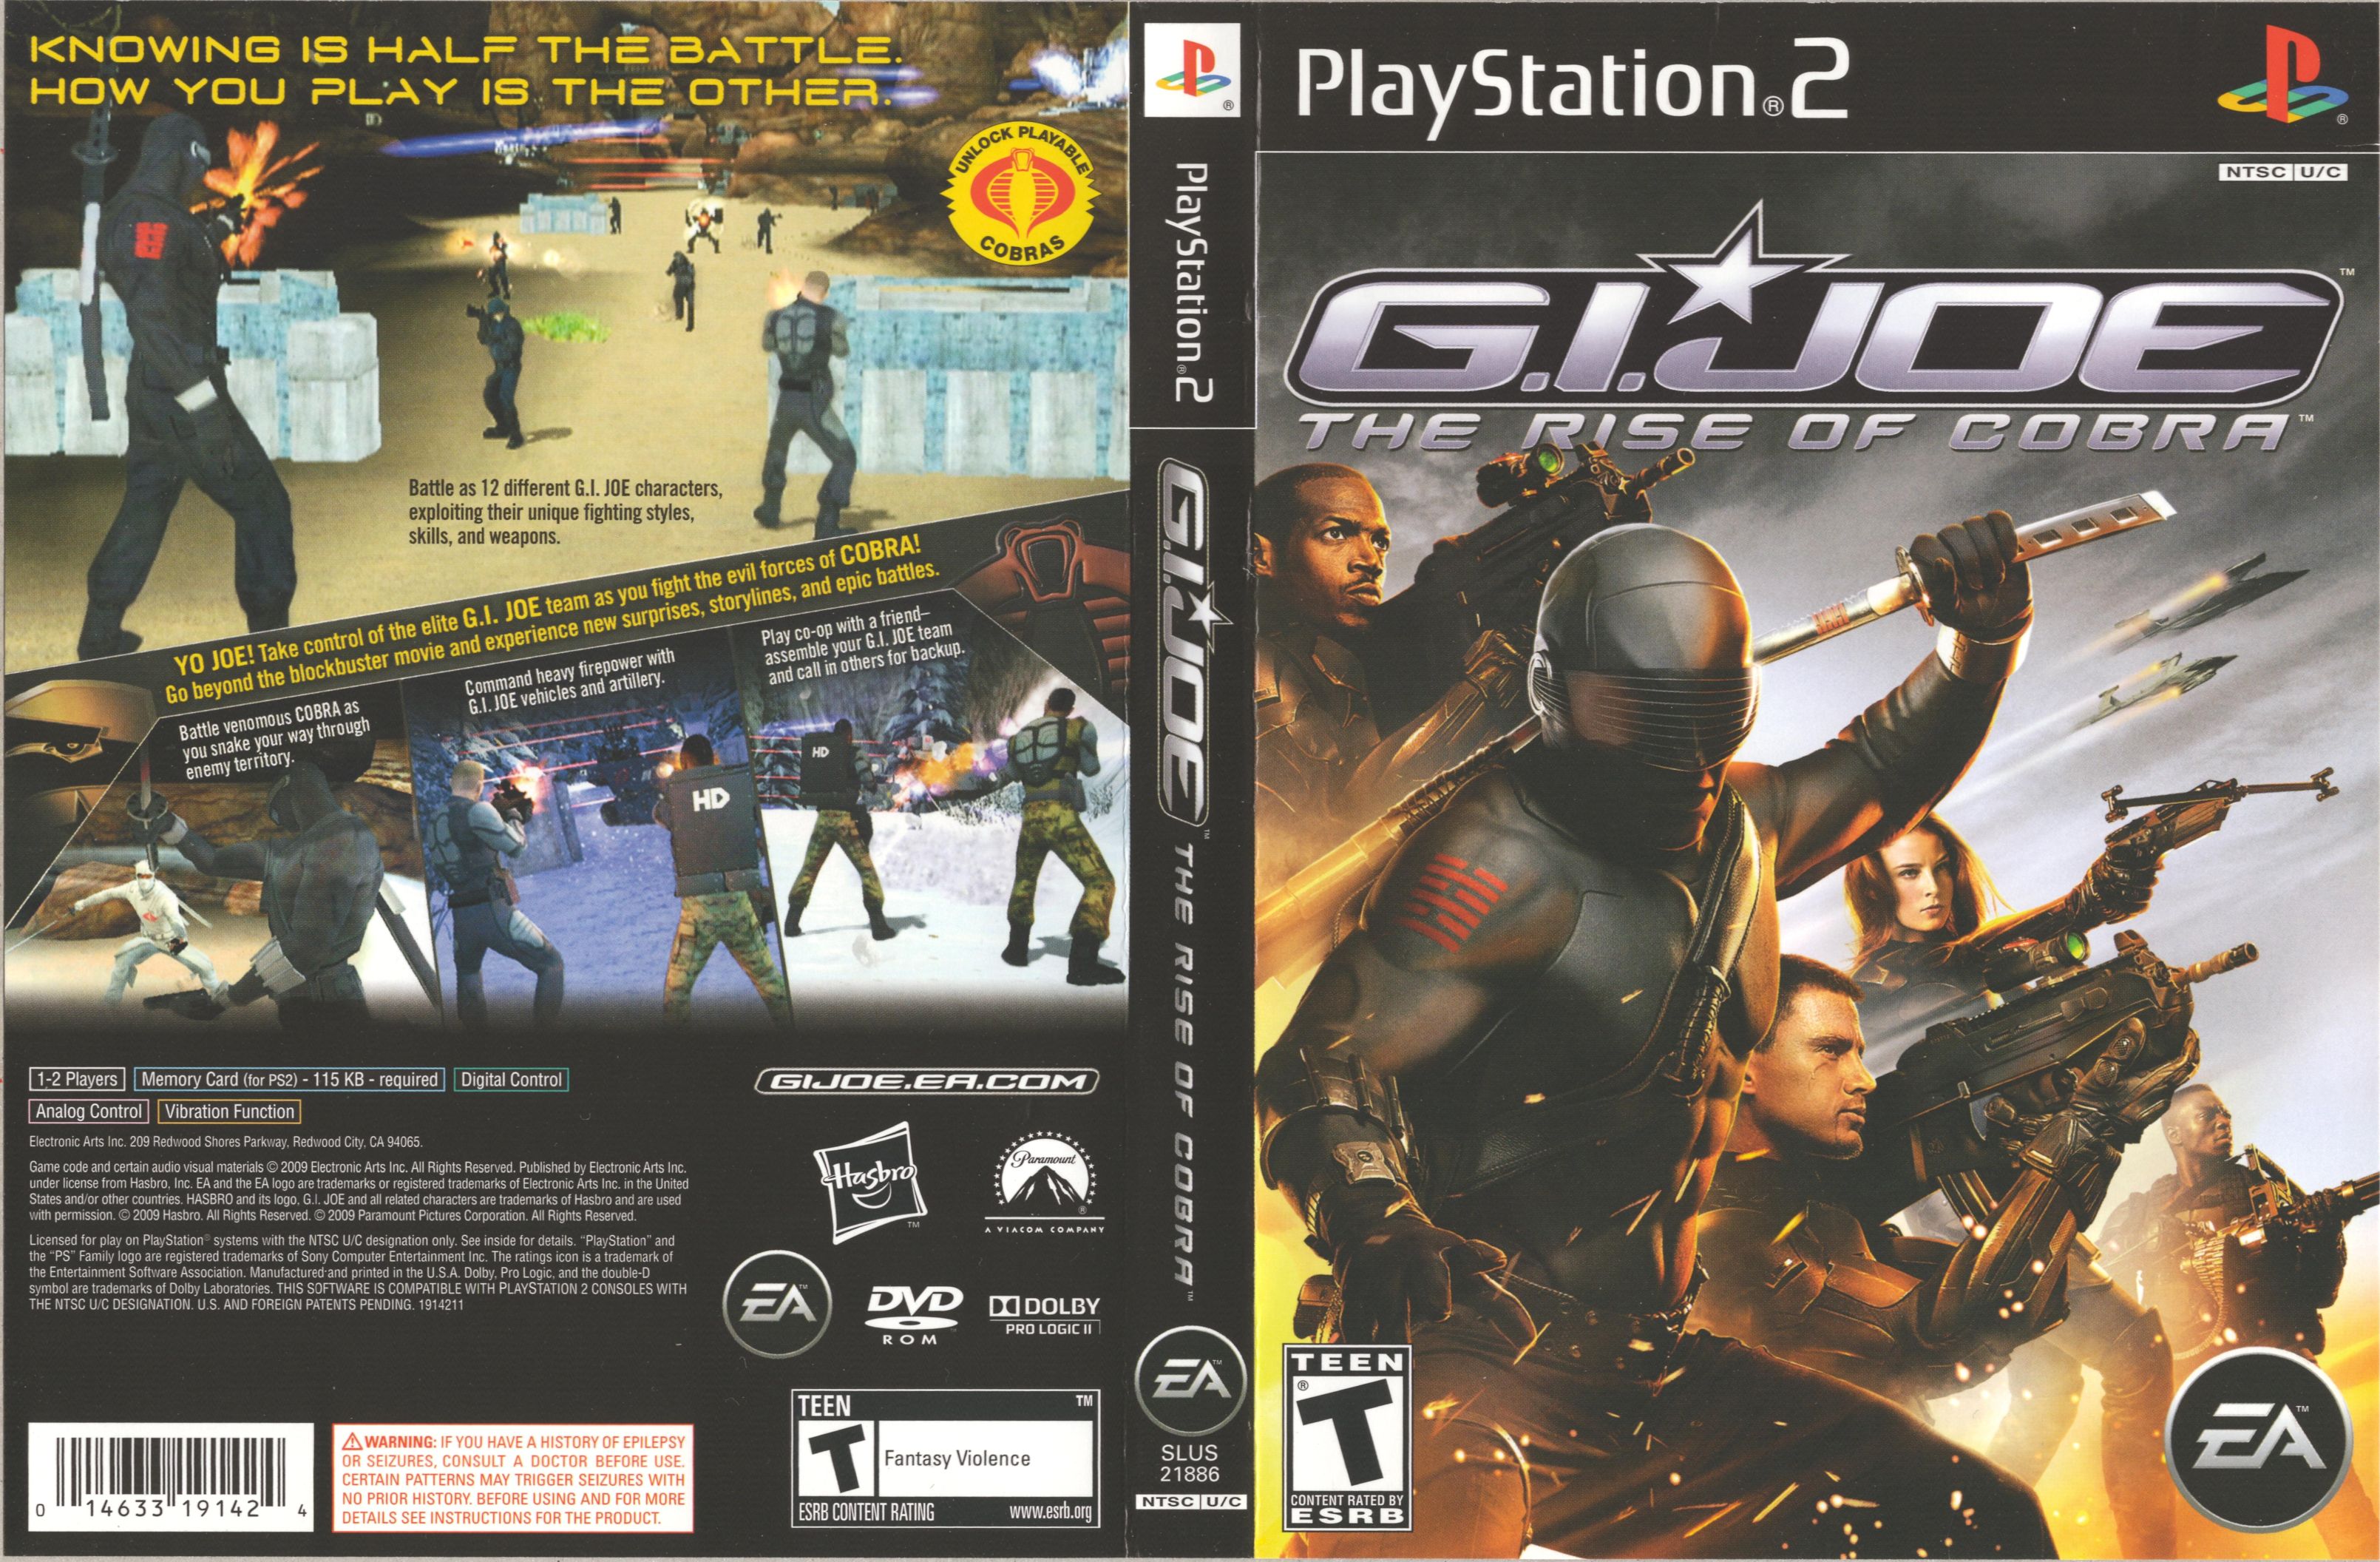 G.I. Joe - The Rise of Cobra PS2 cover.